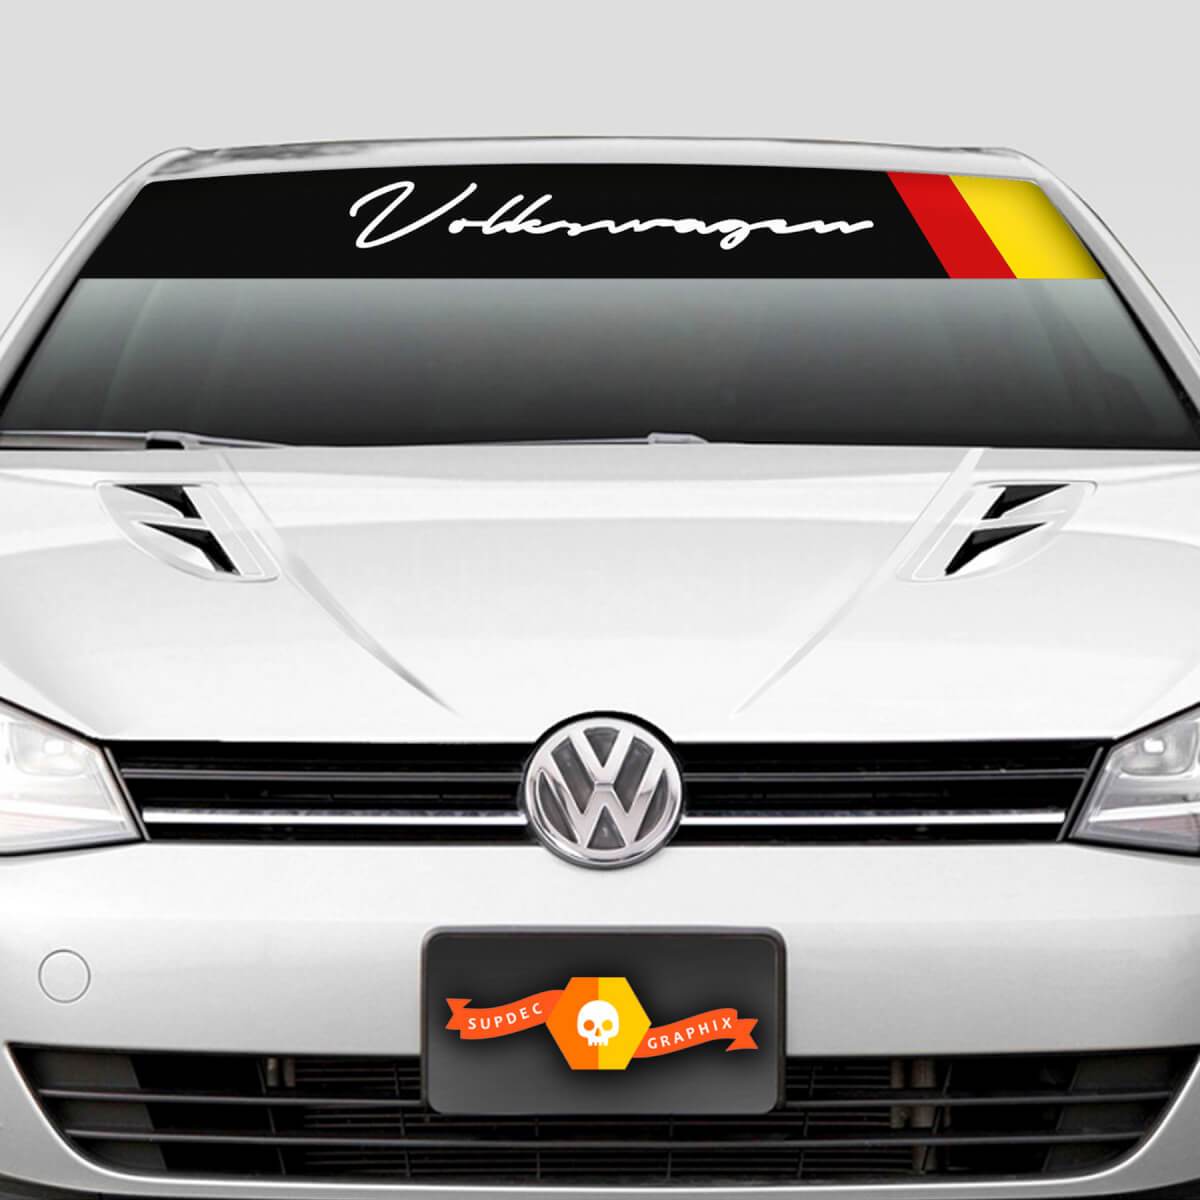 Volkswagen Vw Windshield Banner Decal Sticker, Custom Made In the USA